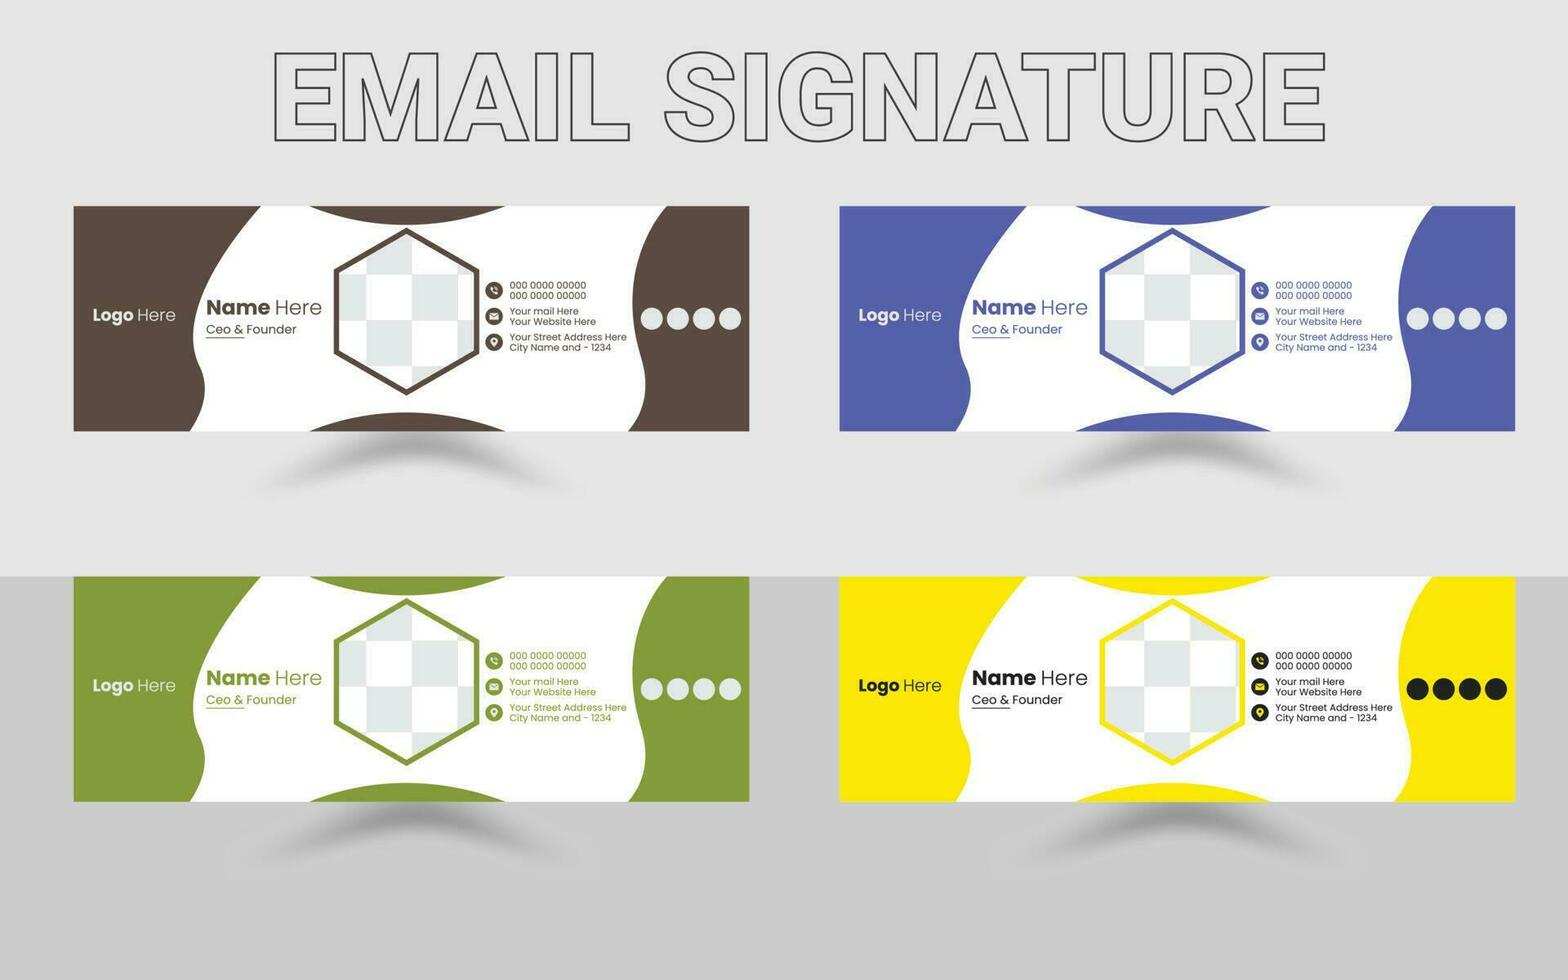 Email Signature Design Template, Email Signature, Vector Email Signature, Mail sign